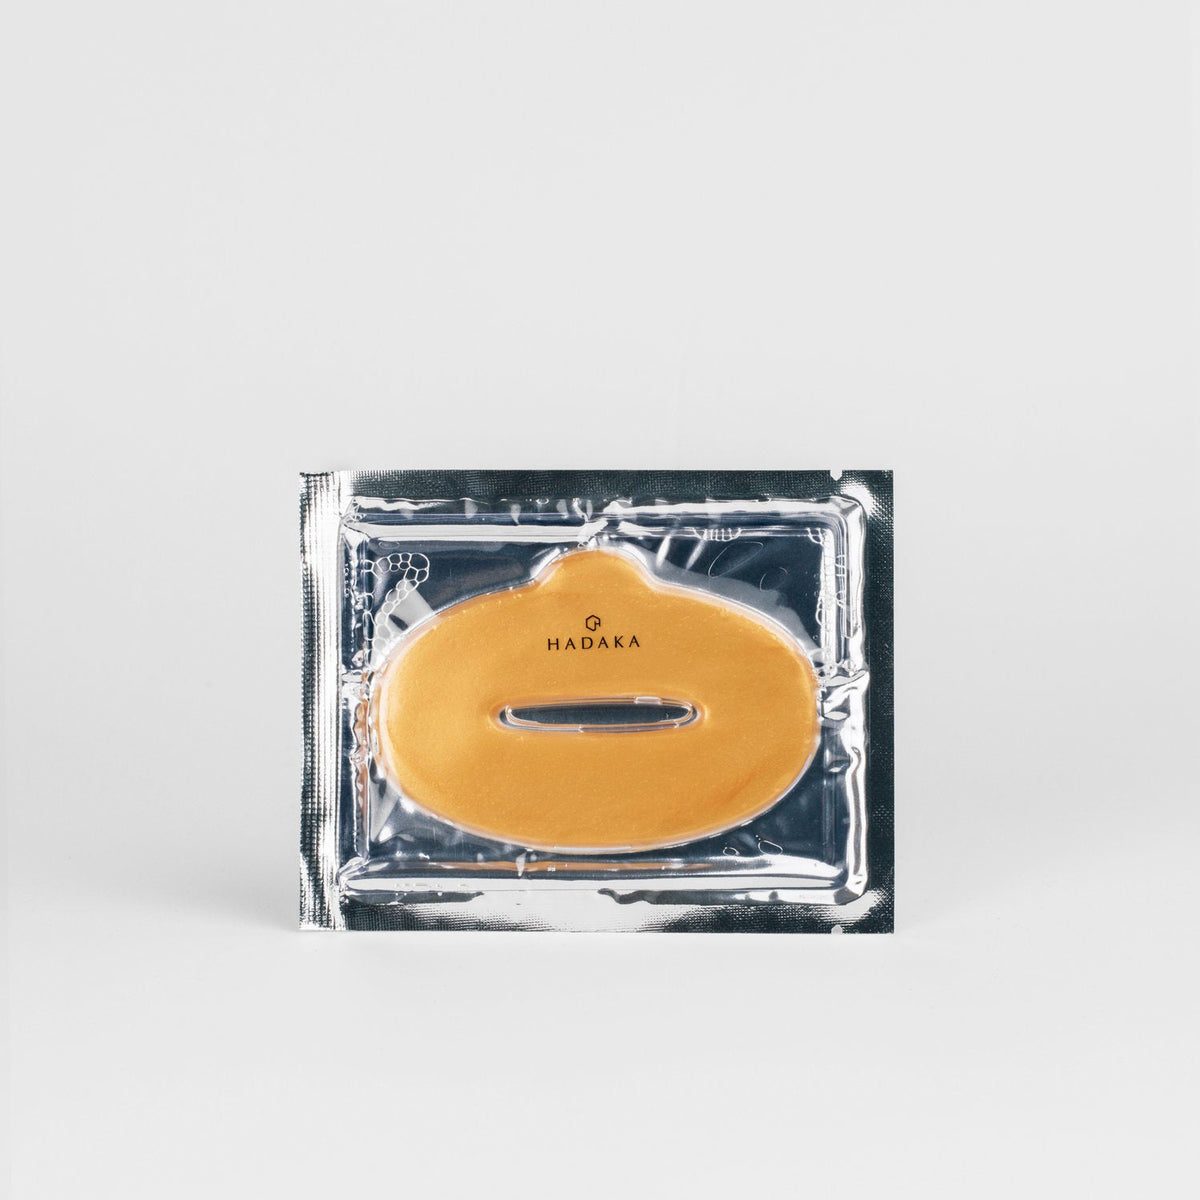 HADAKA 24KT Gold Lip Mask - Blend Box